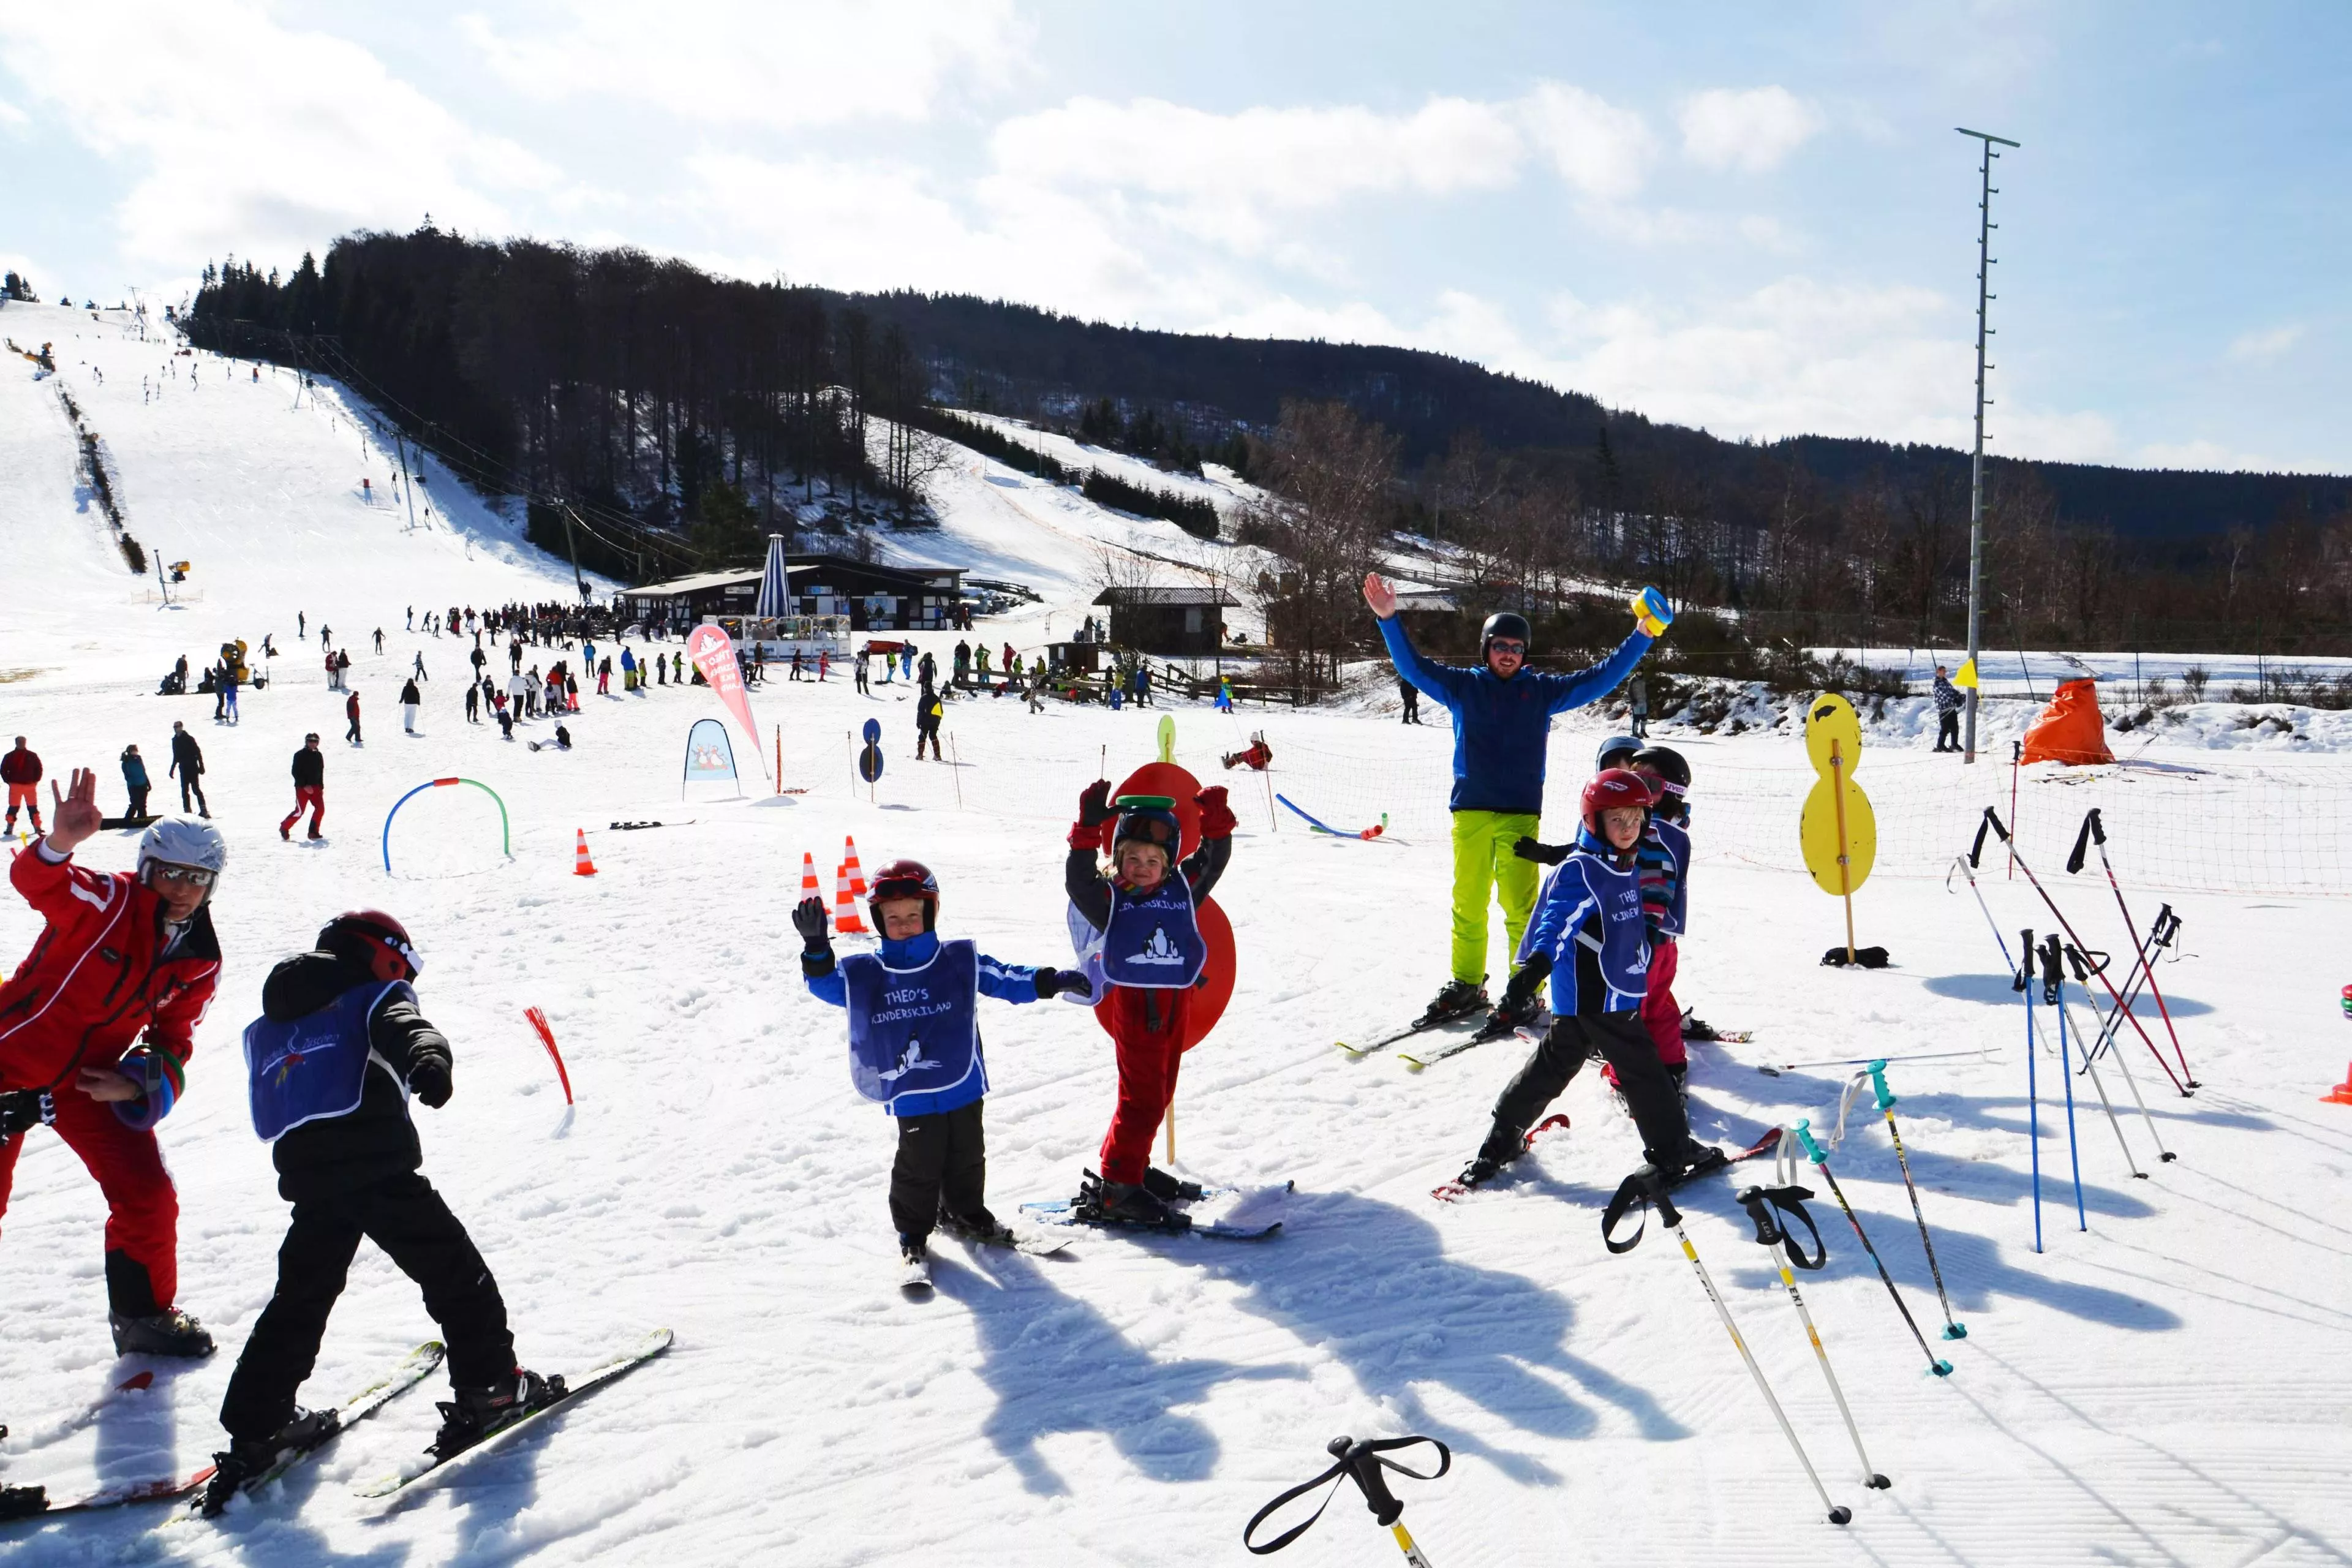 Ski School Poppenberg in Germany, Europe | Snowboarding,Skiing - Rated 0.7